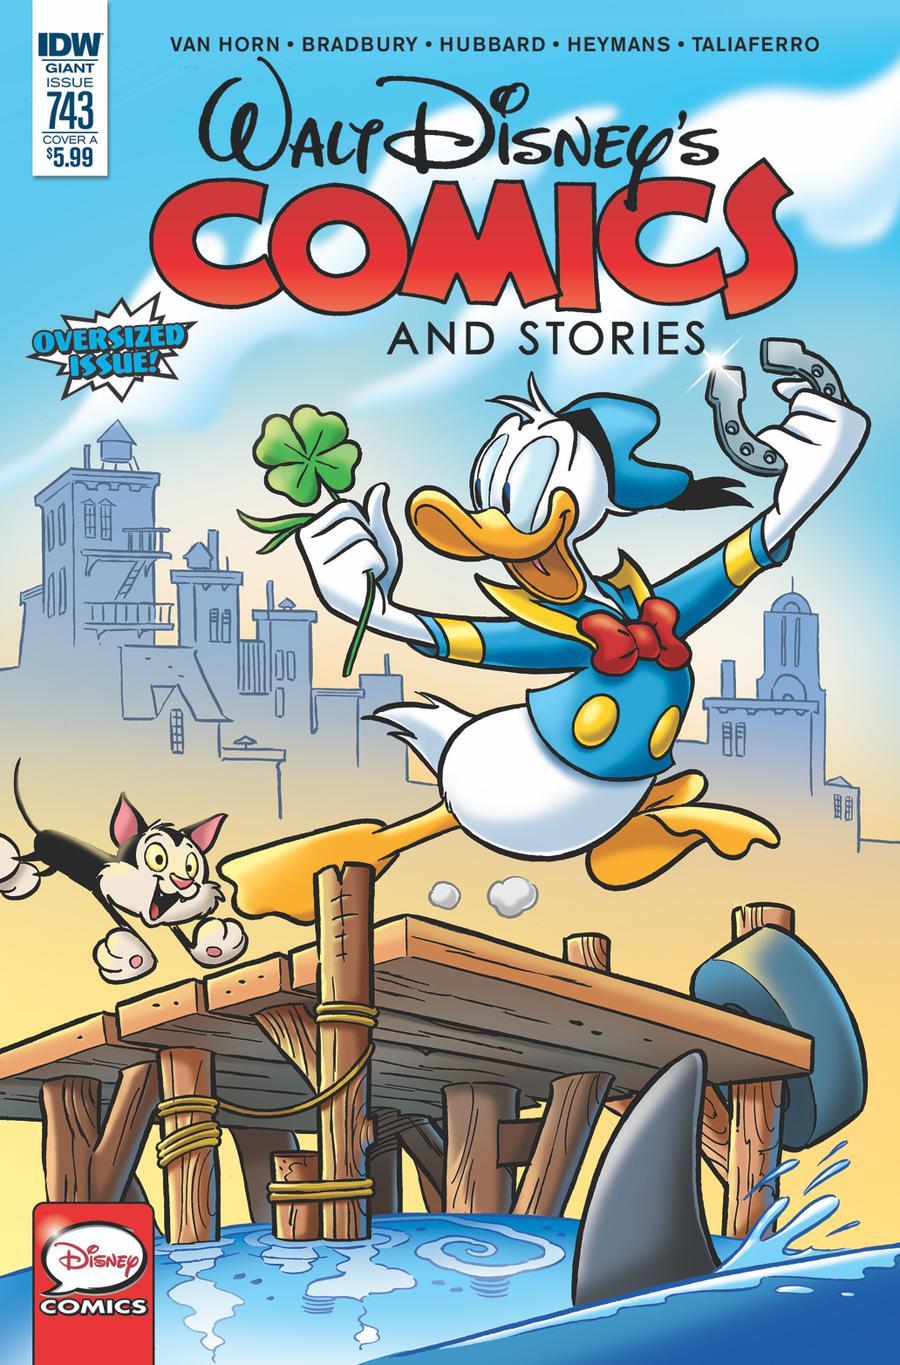 Walt Disneys Comics & Stories Vol. 1 #743